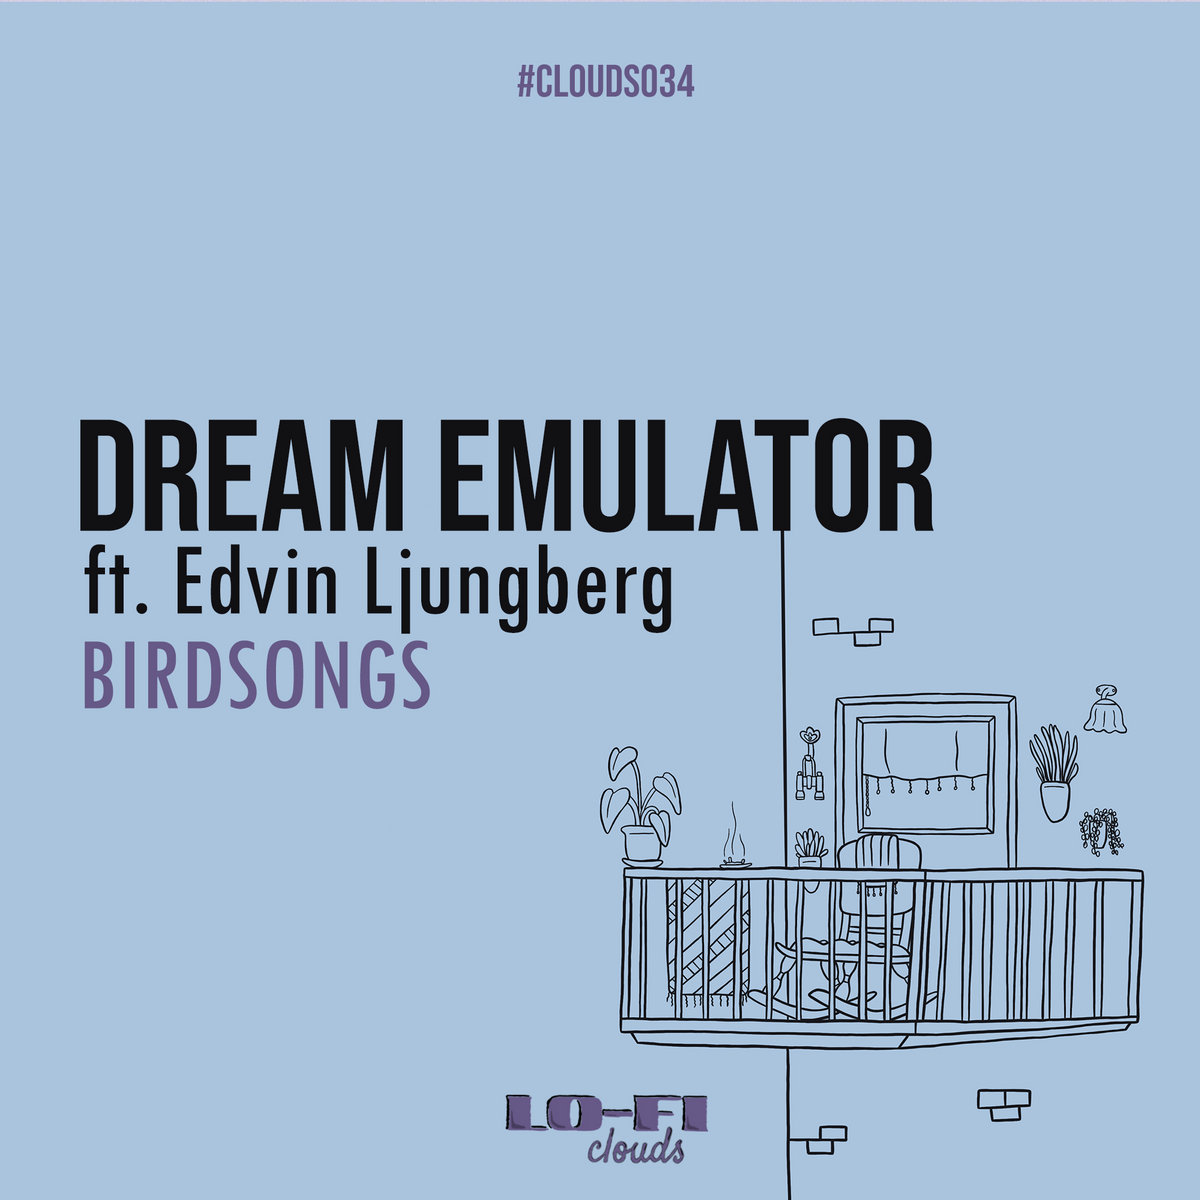 dream emulator - birdsongs featuring Edvin Ljungberg - CLOUDS034